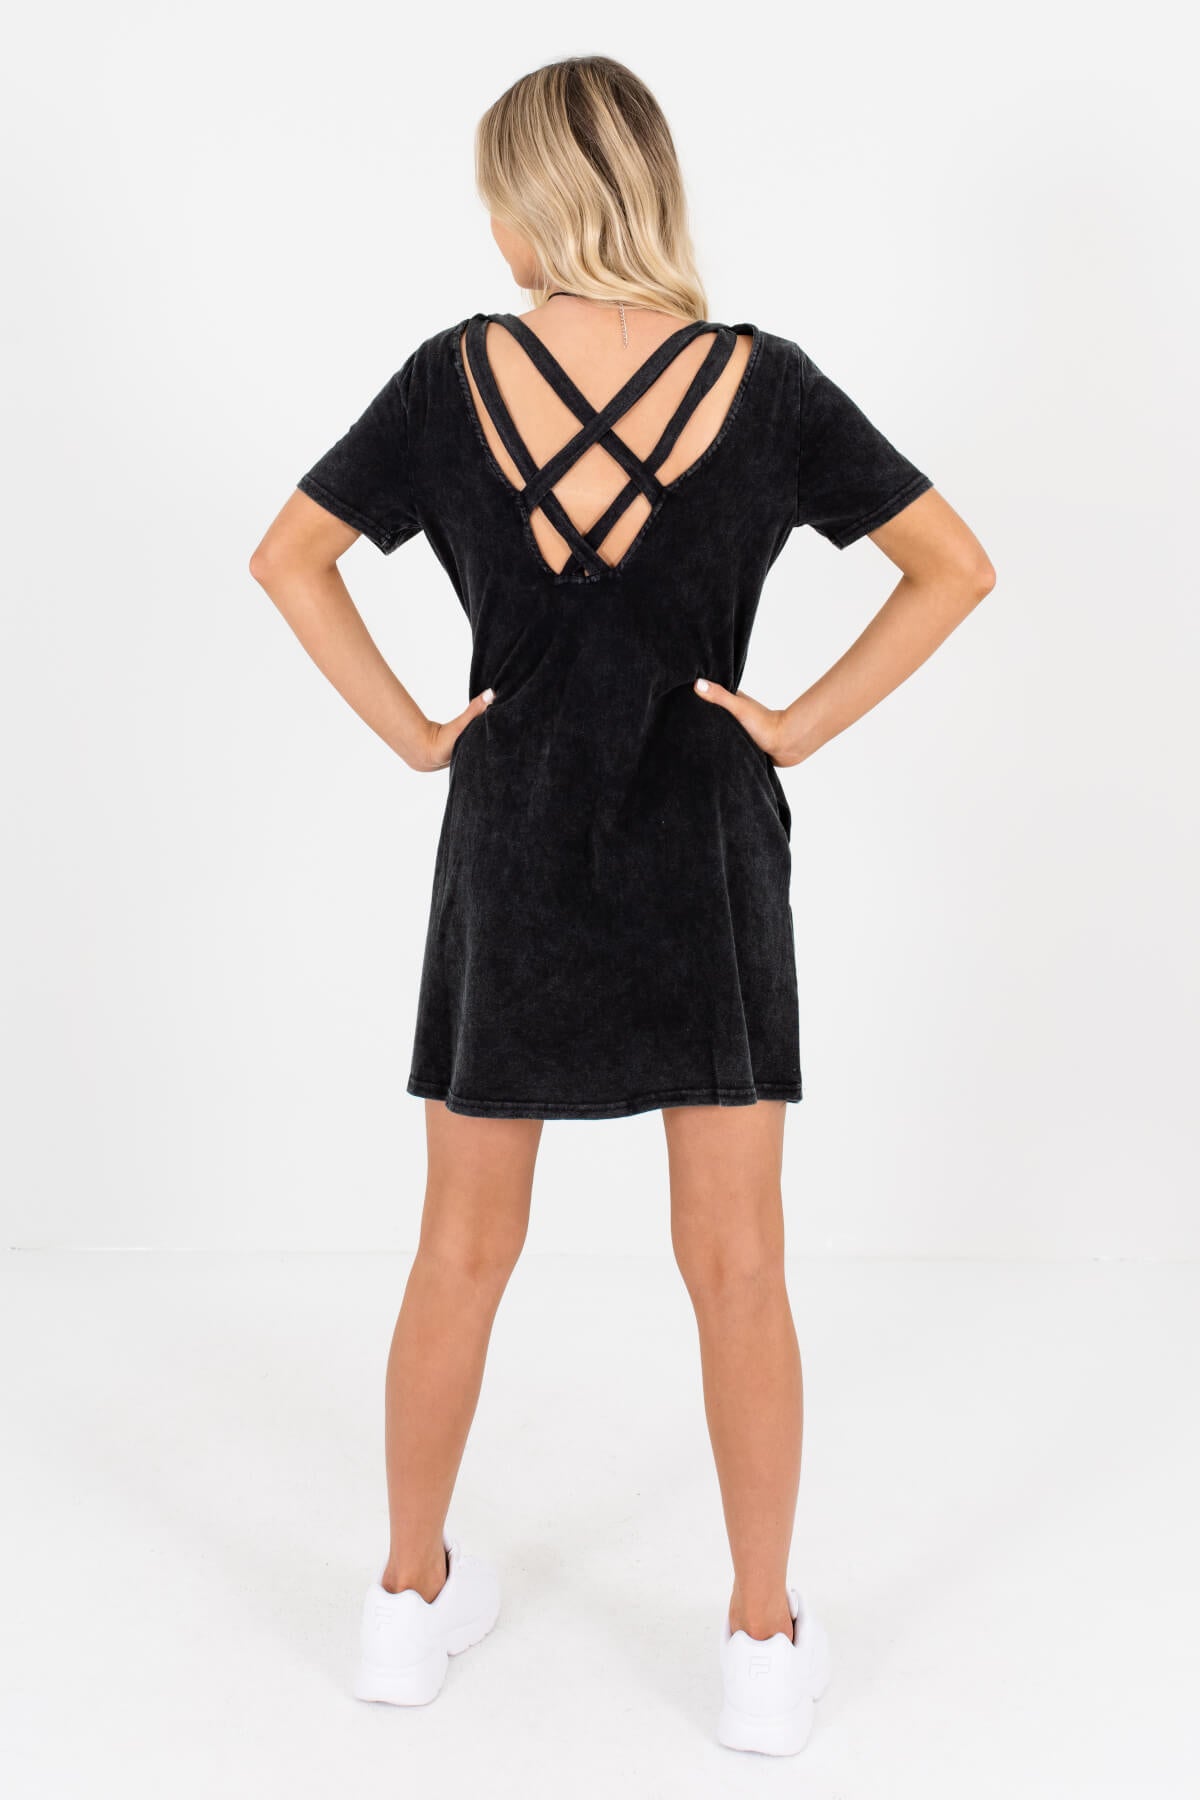 Women's Black V-Neckline Boutique Mini Dress